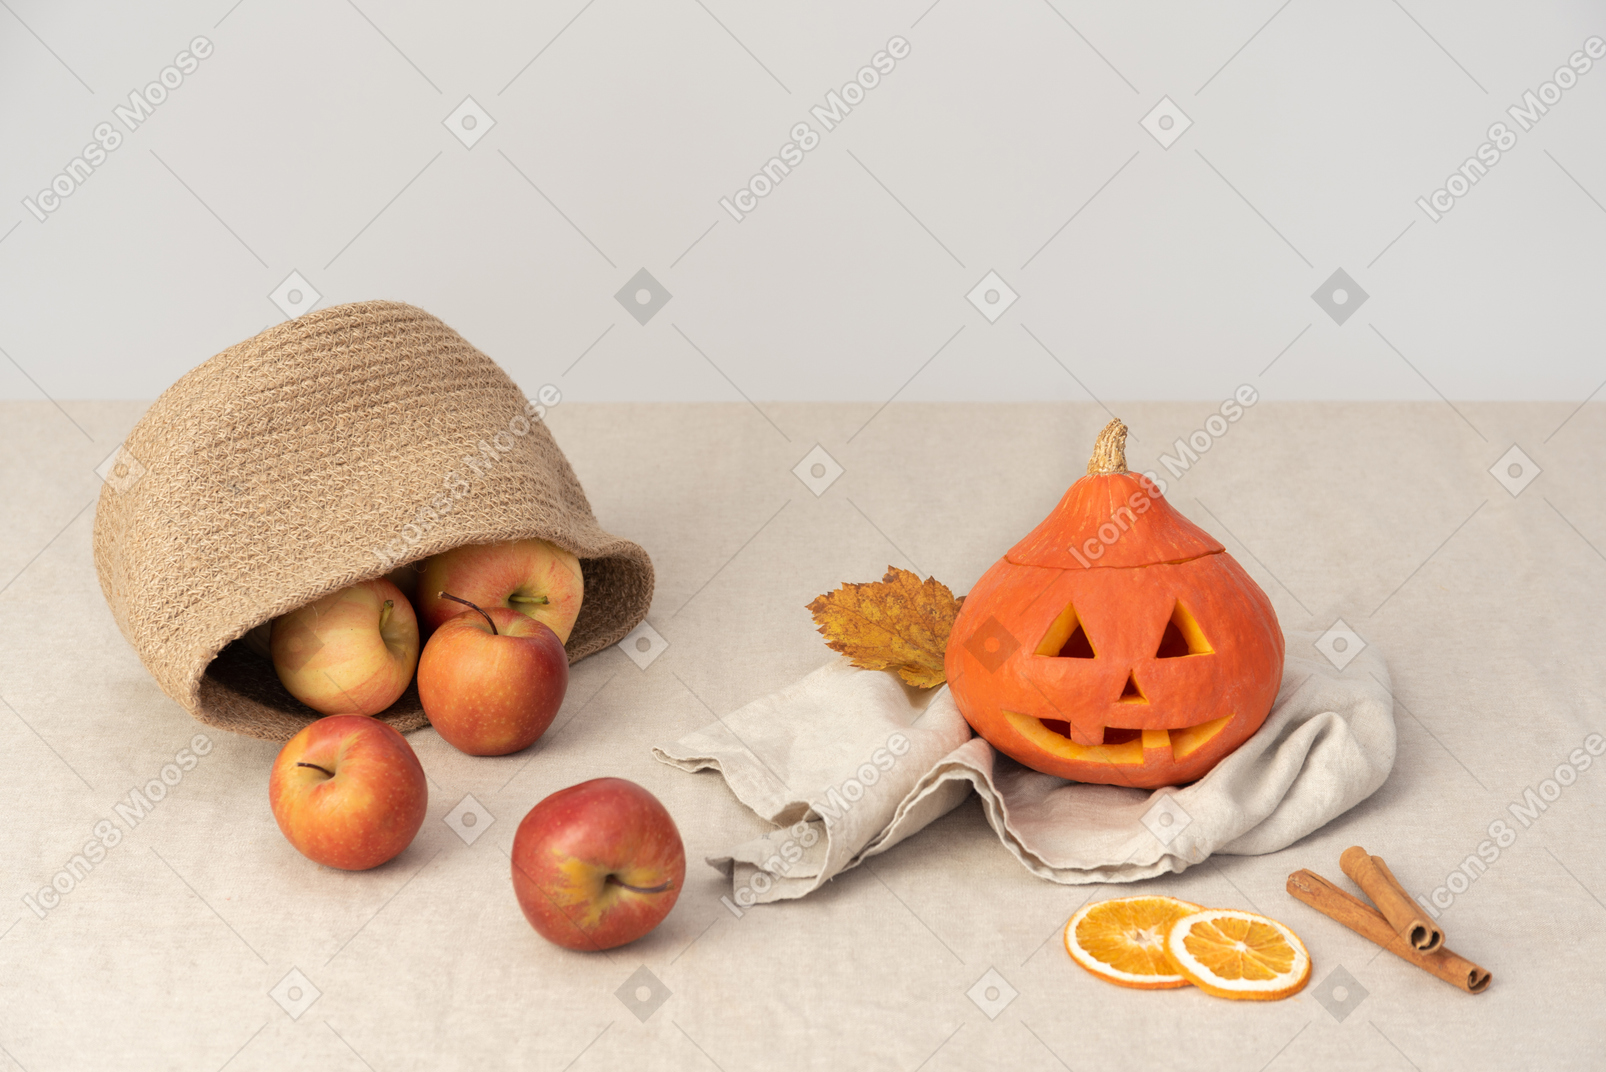 Apples in basket, pumpkin, orange slices and cinnamon sticks